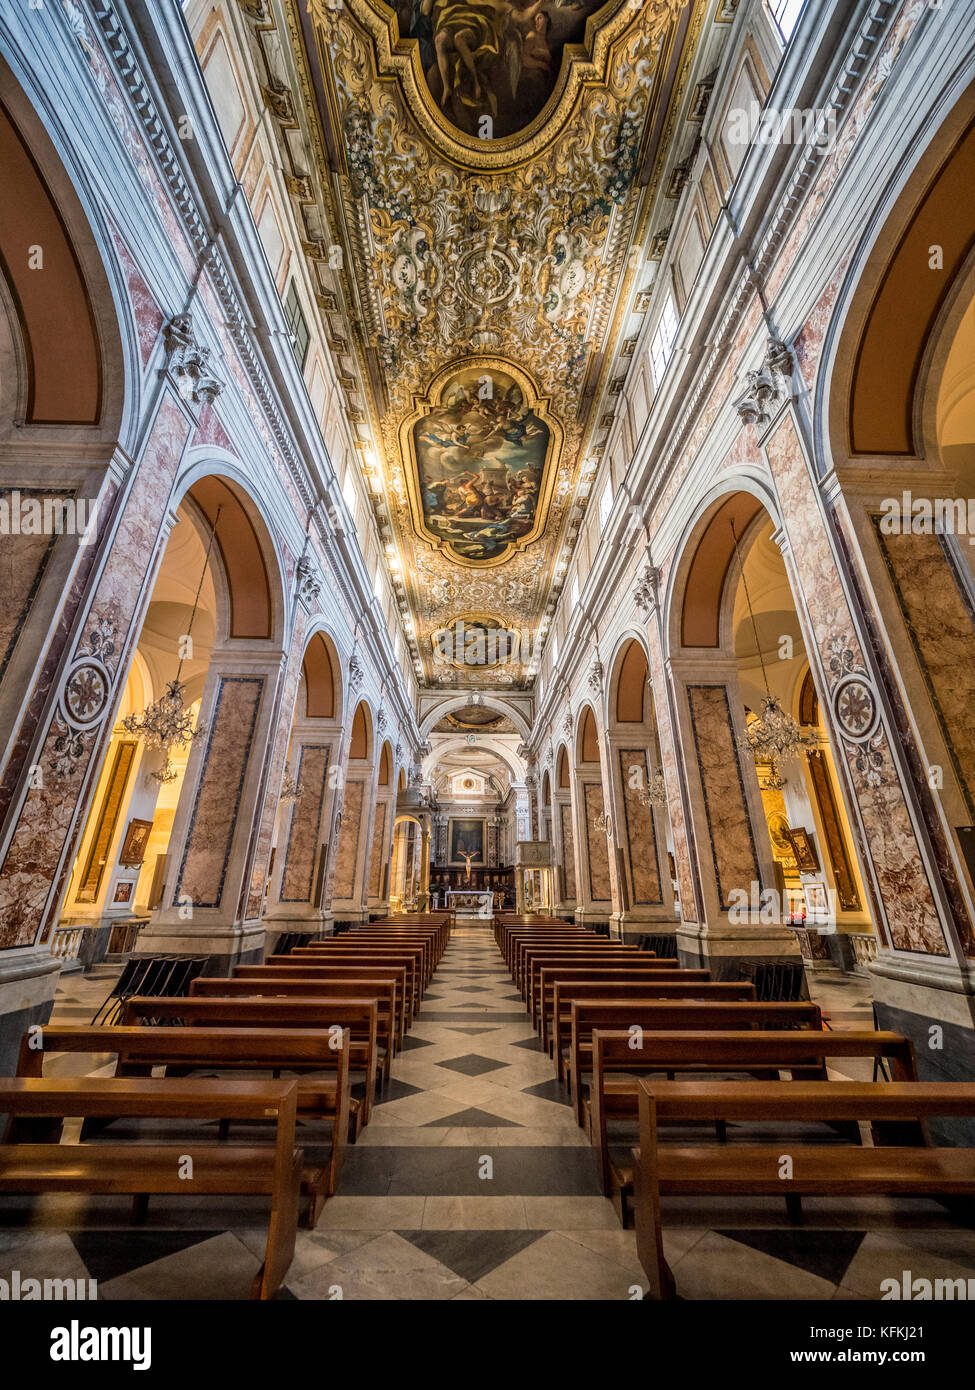 Interior of Sorrento Cathedral, Sorrento, Italy. Stock Photo